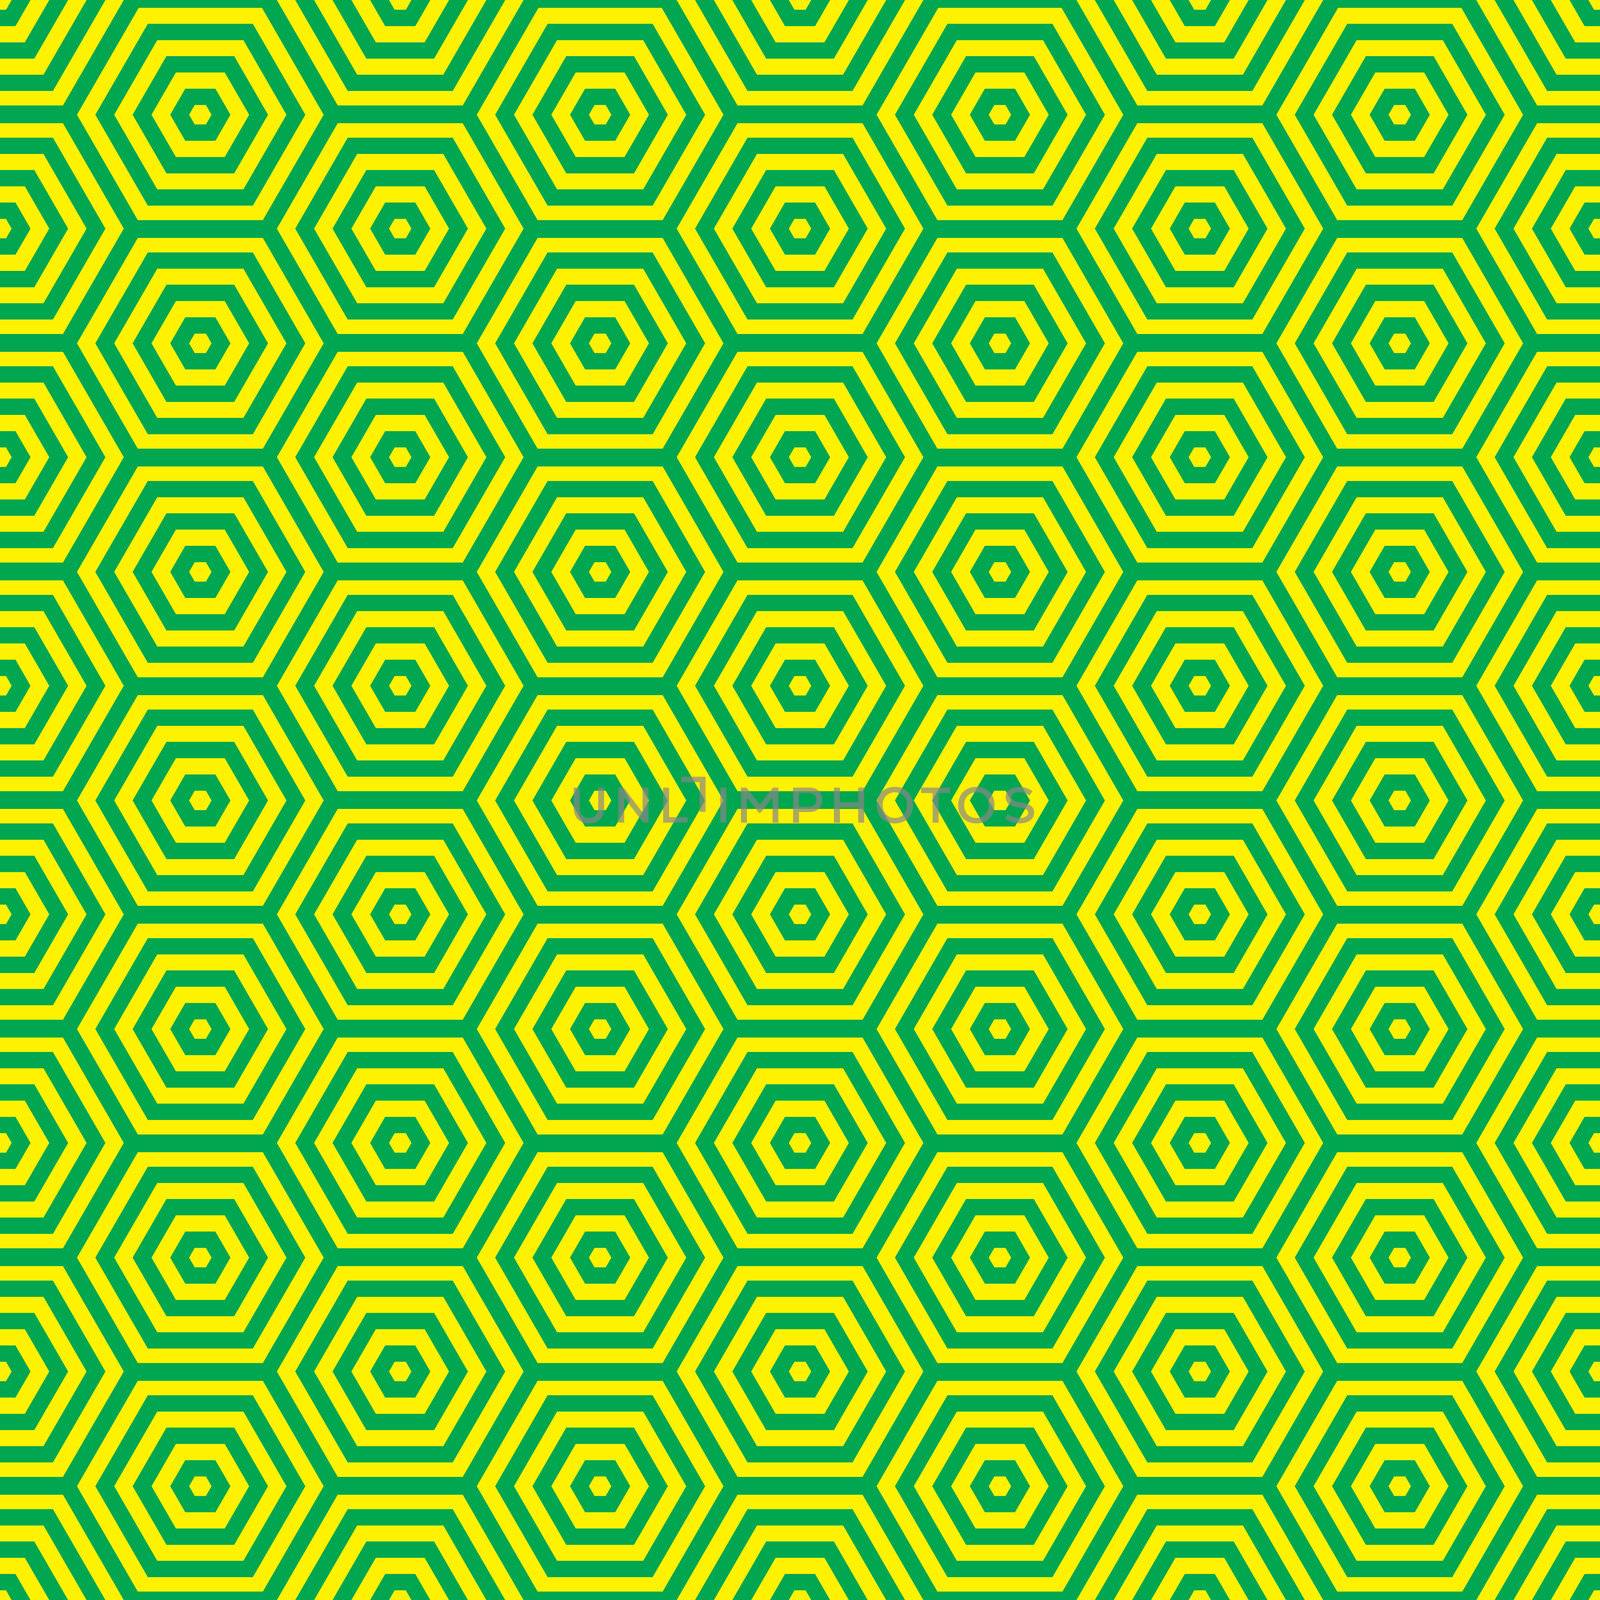 Retro seventies green pattern by nicemonkey